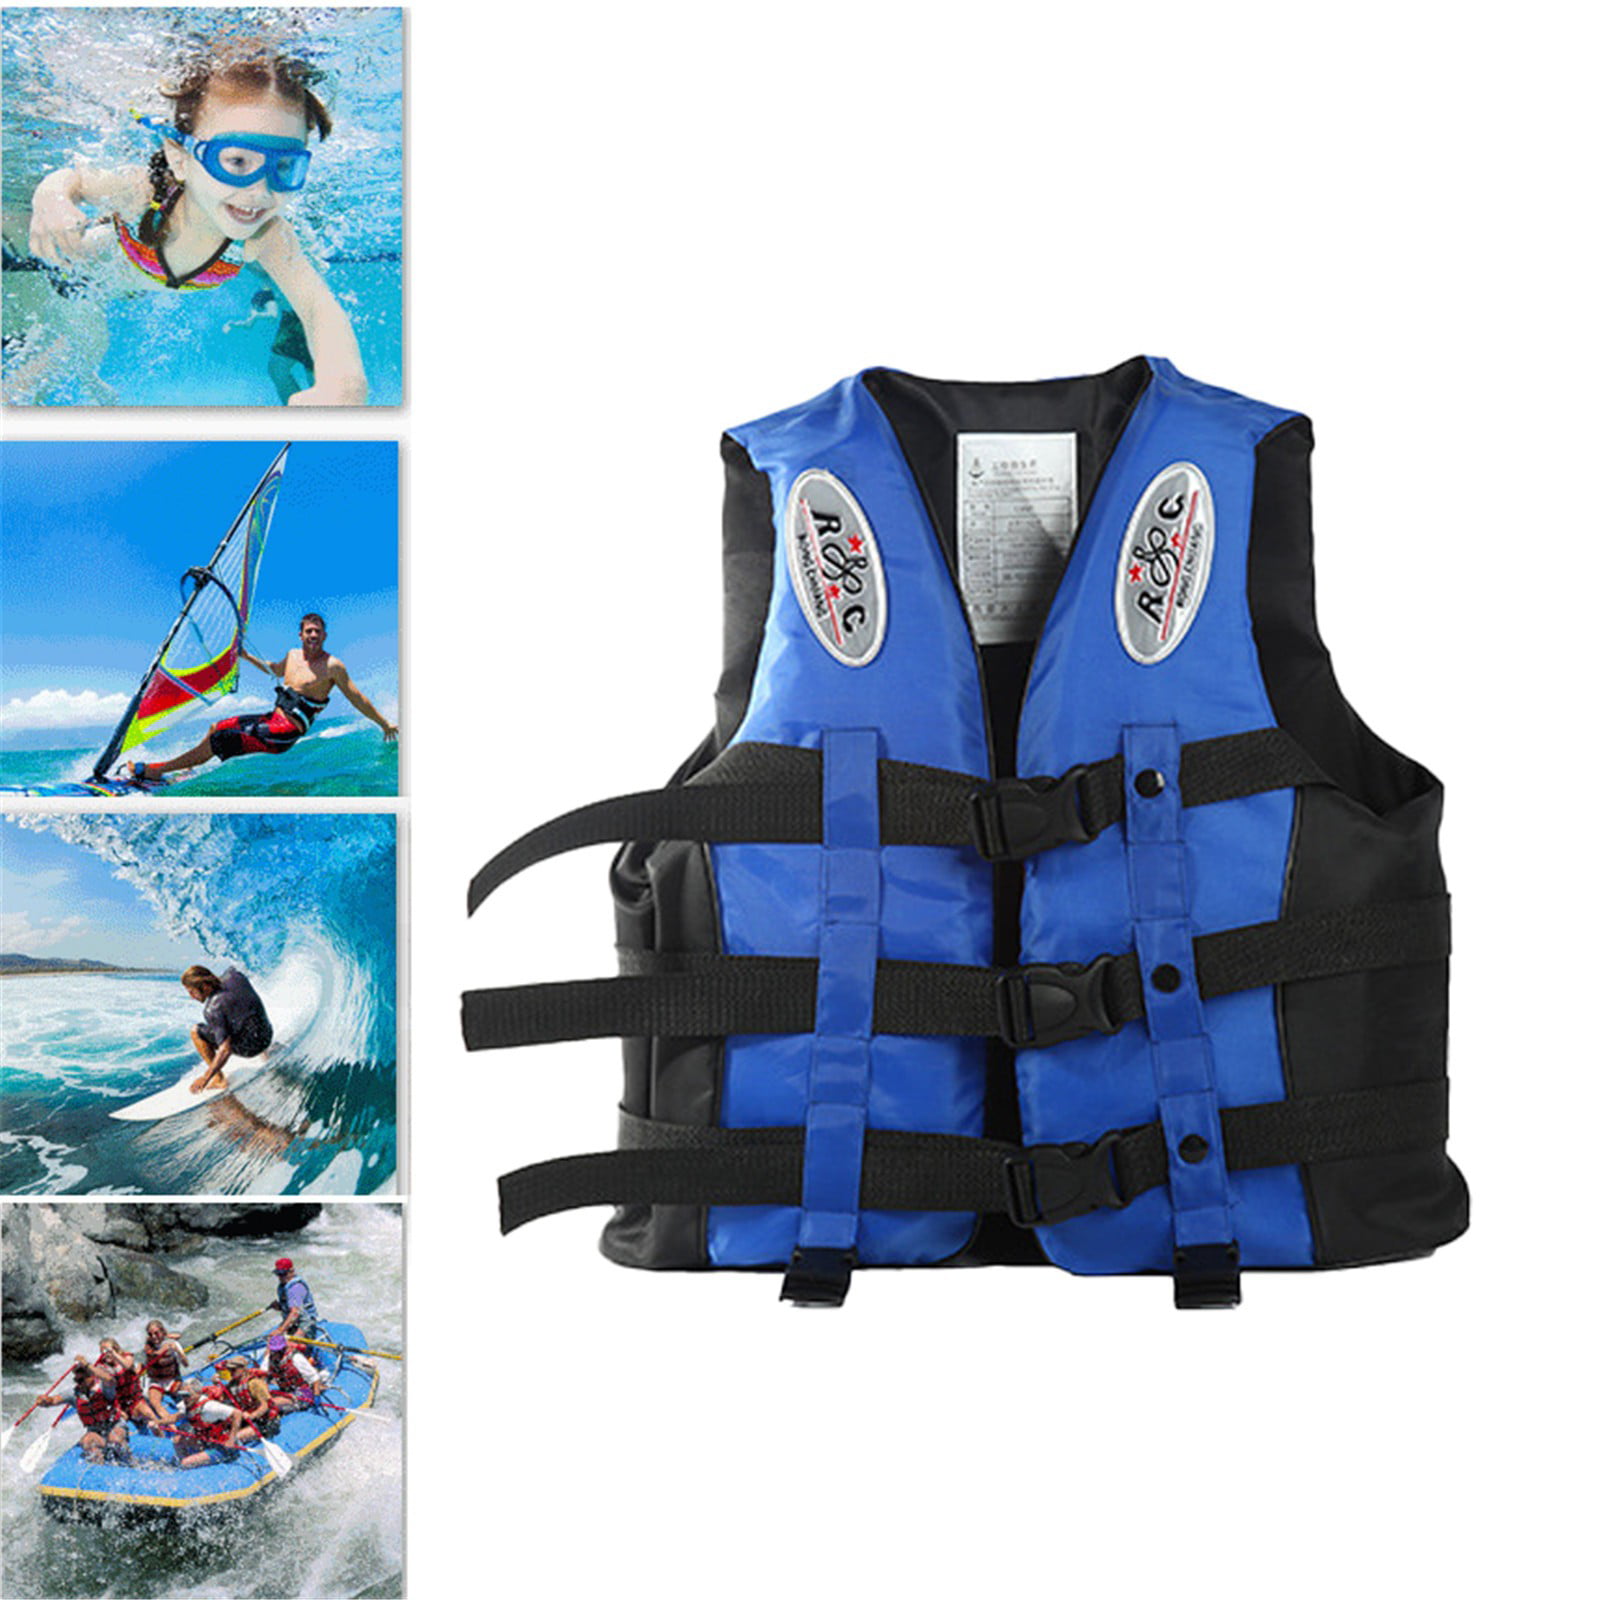 Adult Life Jacket Ski Buoyancy Aid Sailing Surfing Swimming Safety Life Vest 